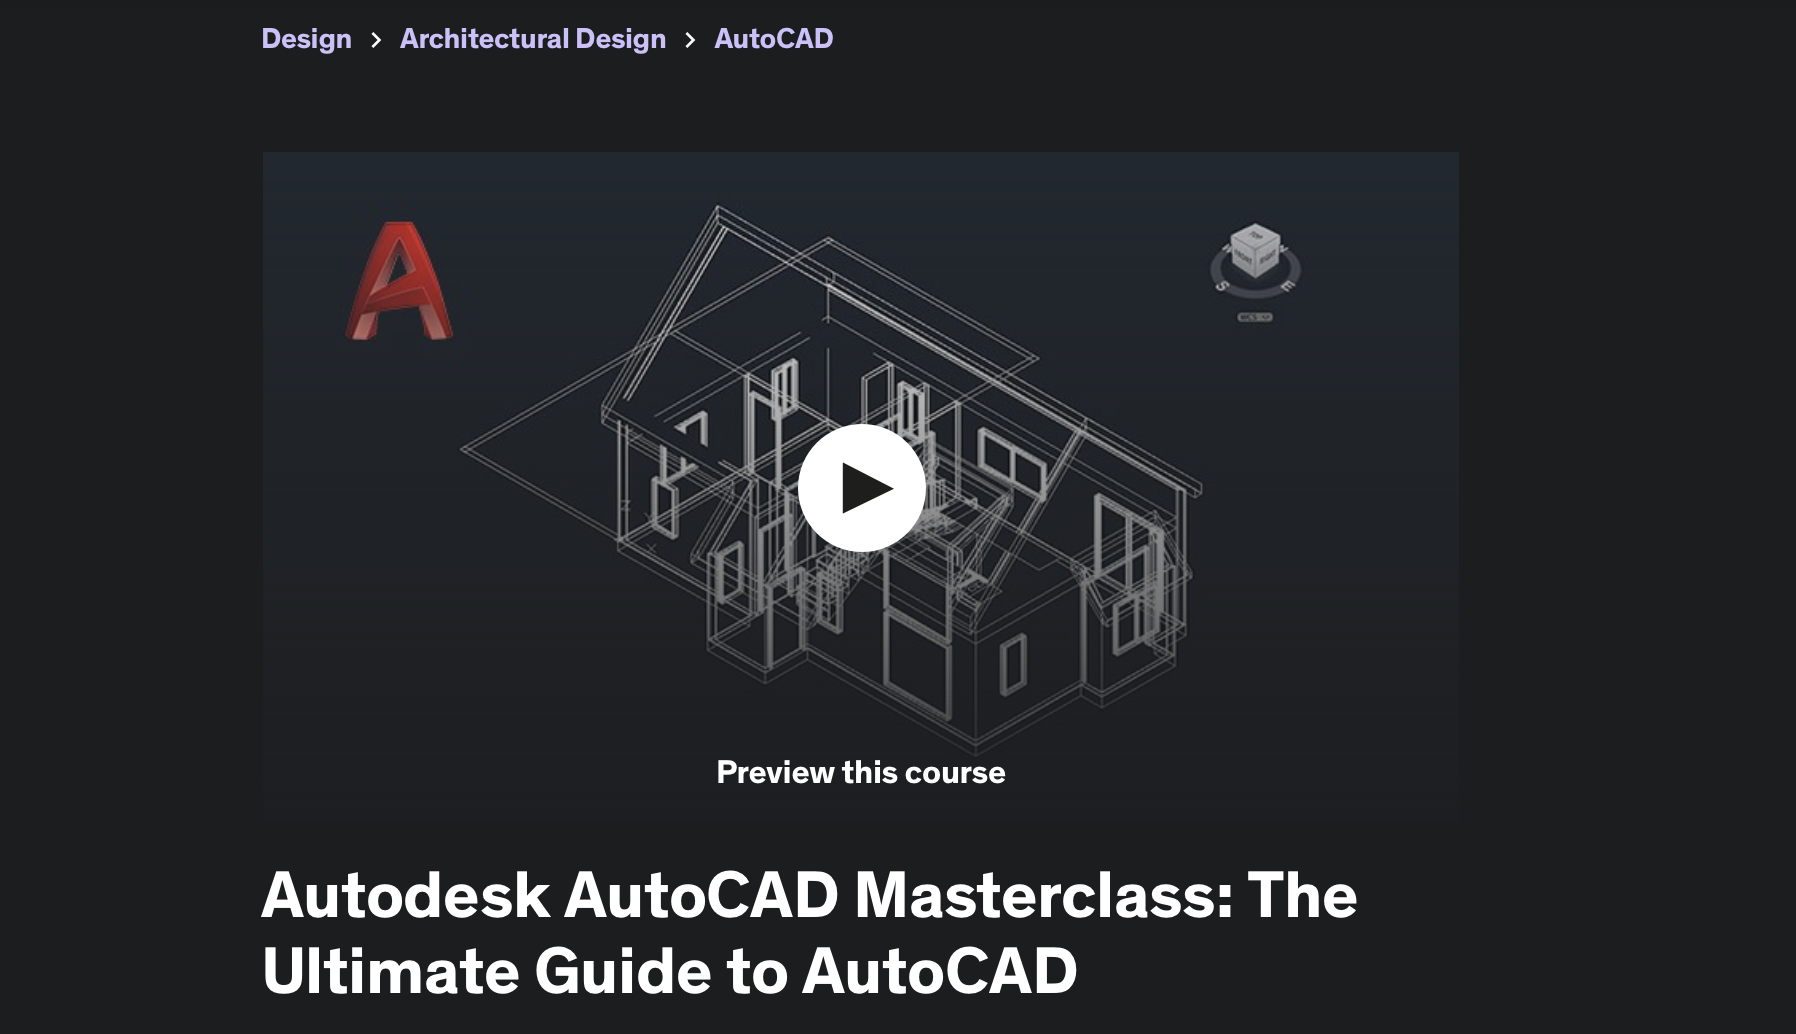 Autodesk AutoCAD Masterclass